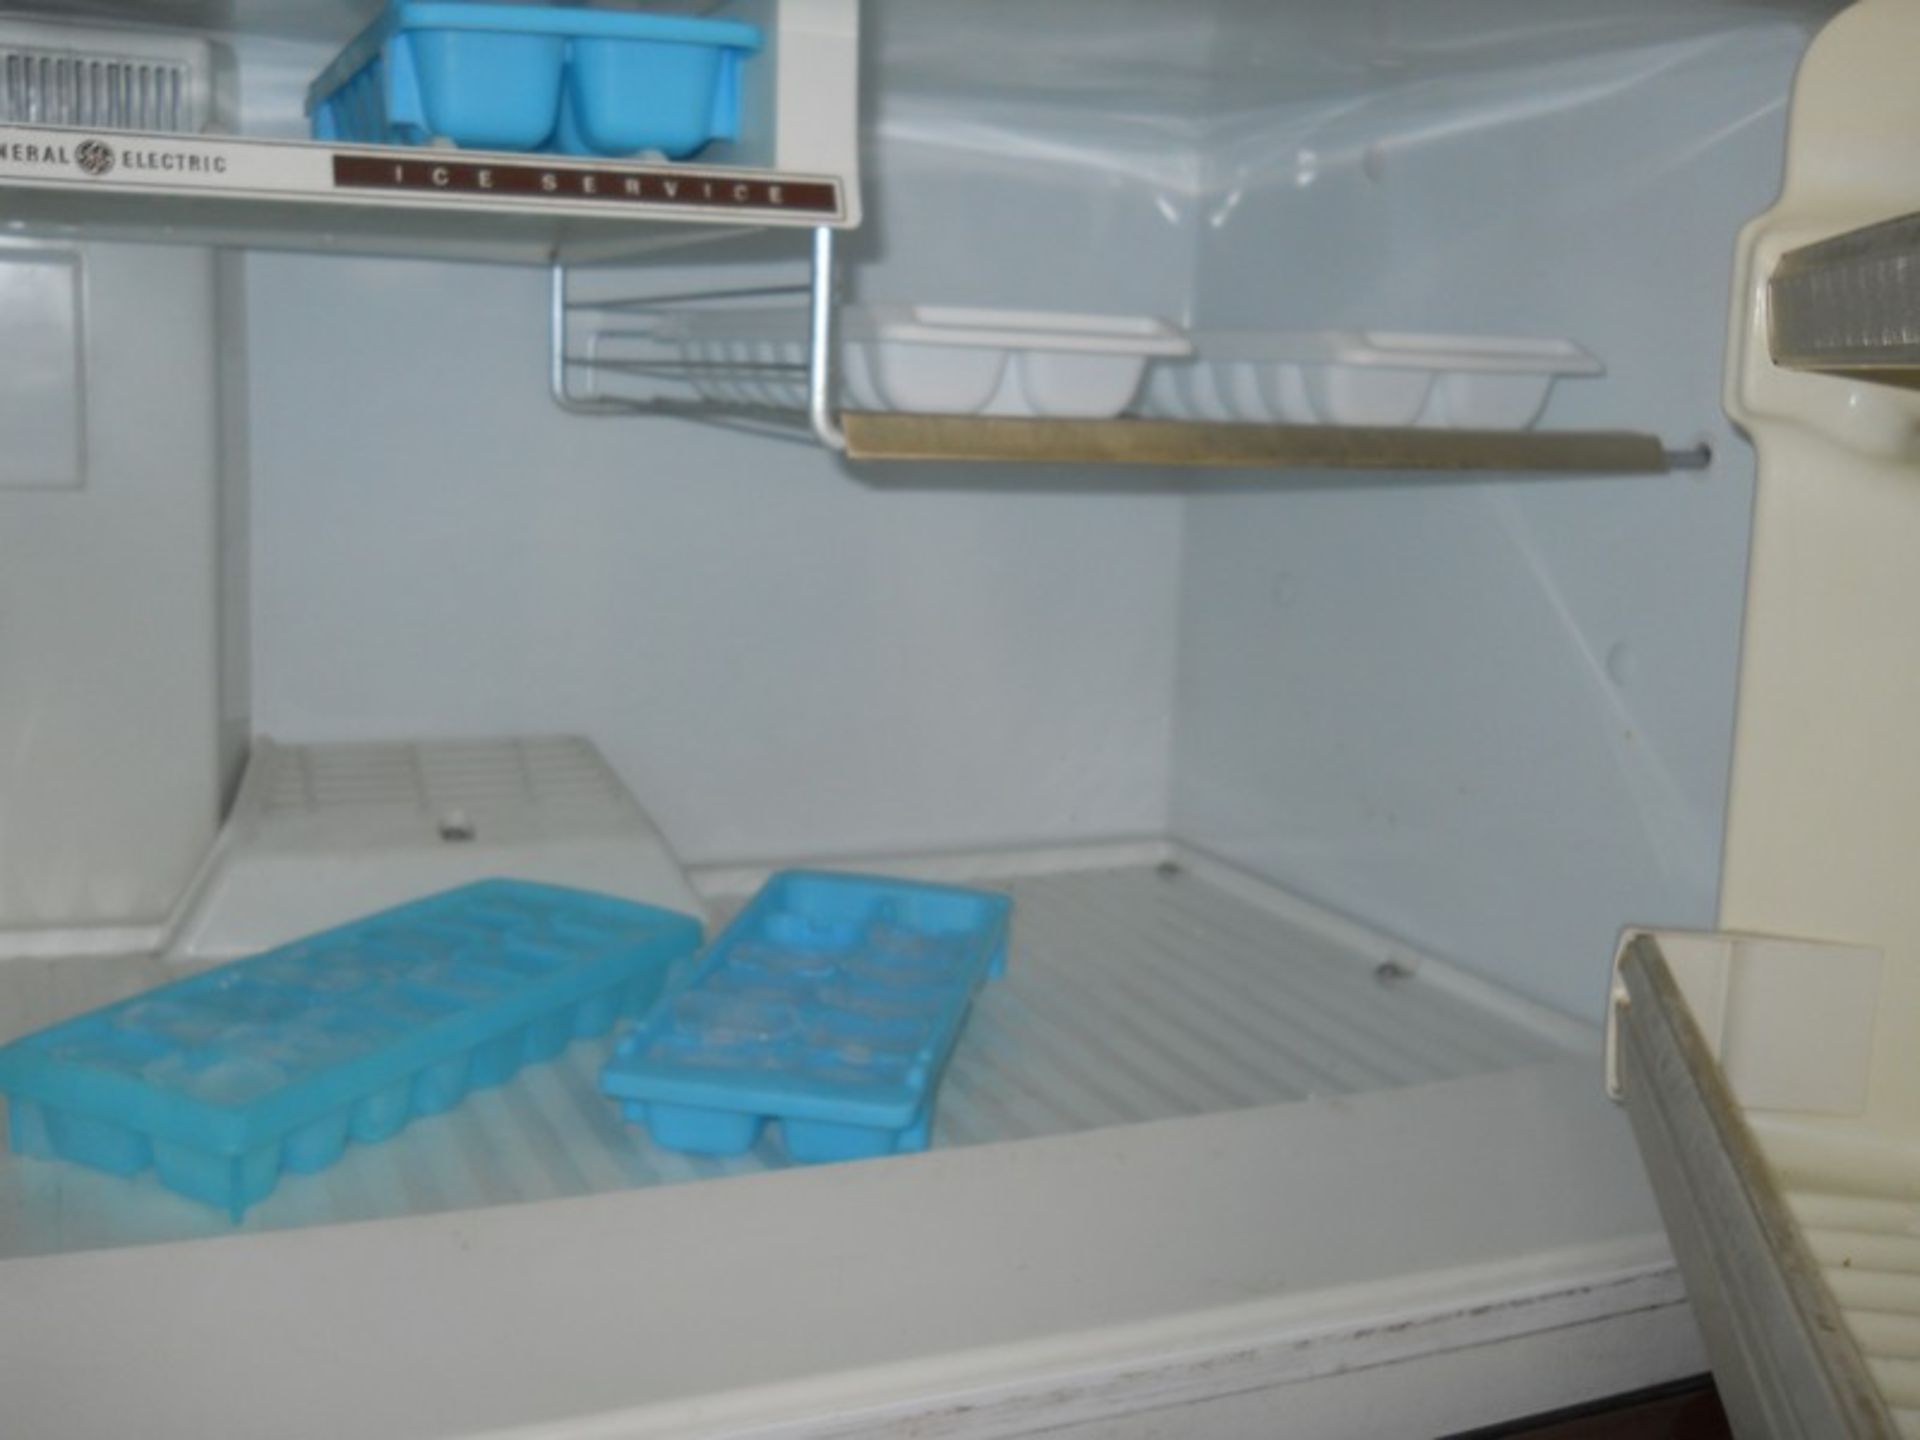 Shop Refrigerator - Image 4 of 5